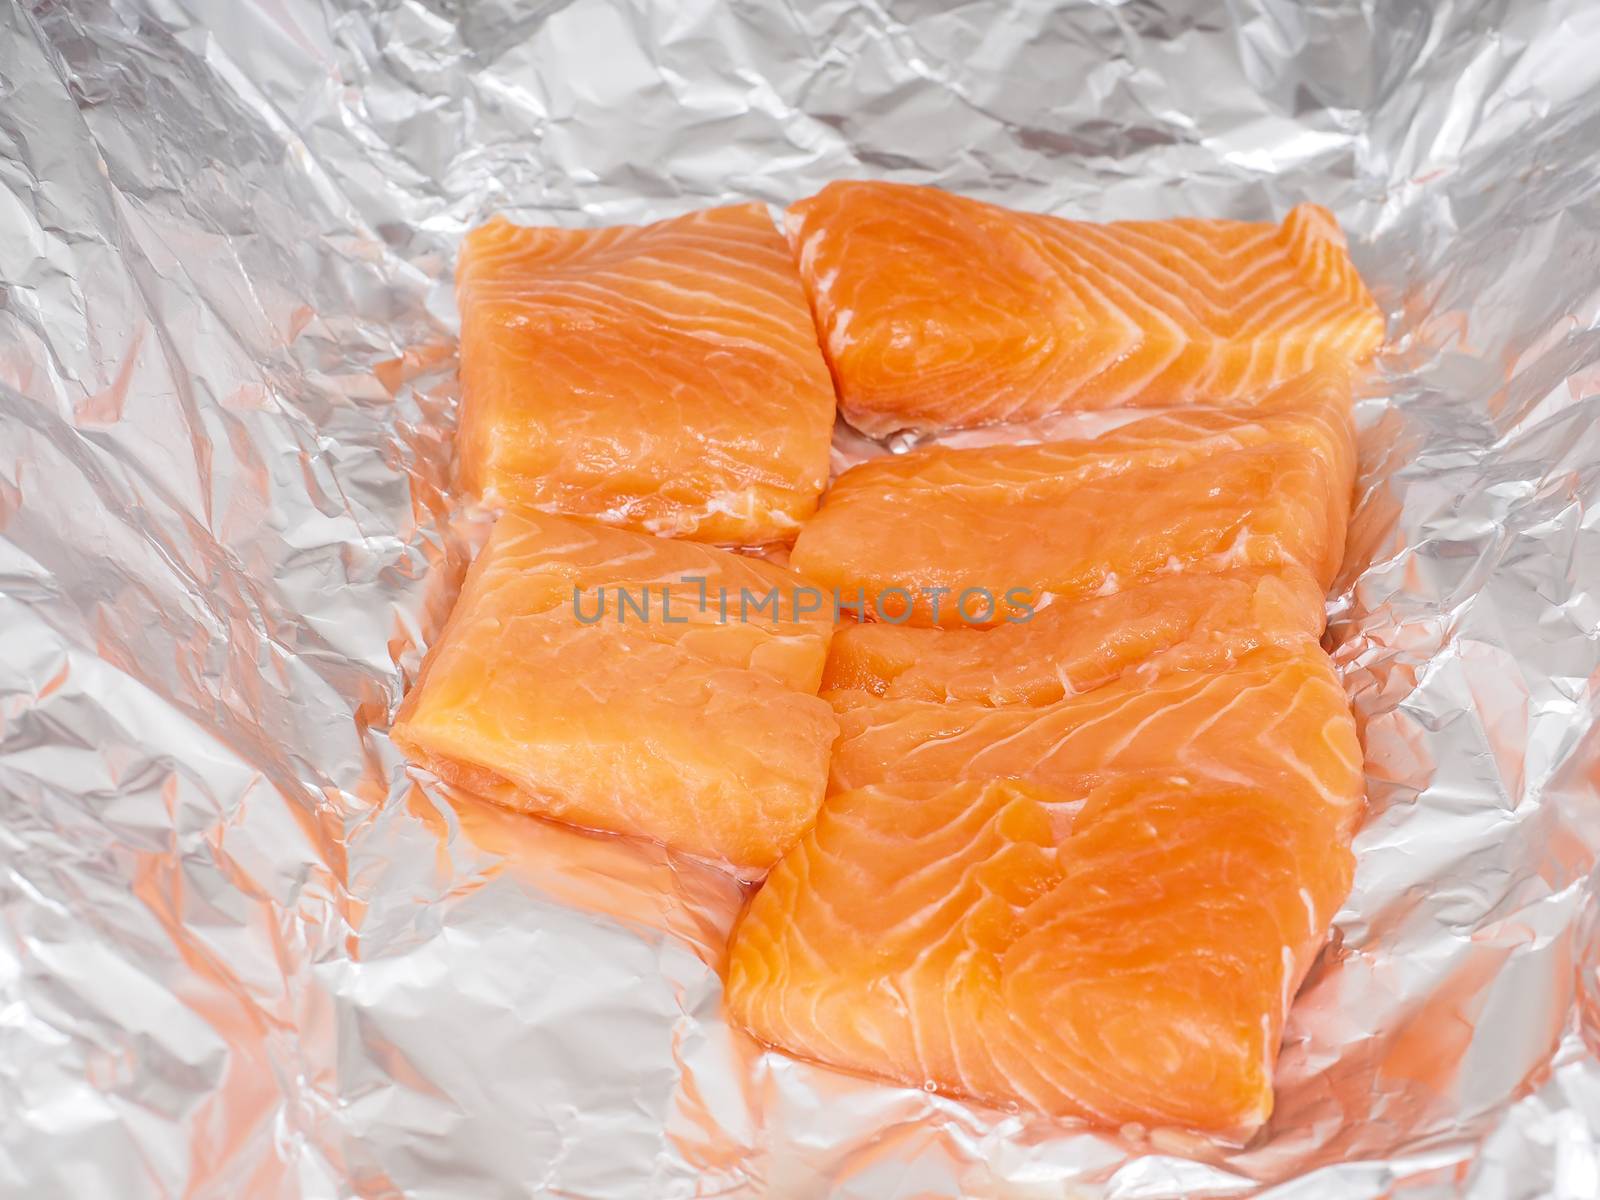 Closeup of unseasoned salmon pieces in aluminum foil by Arvebettum